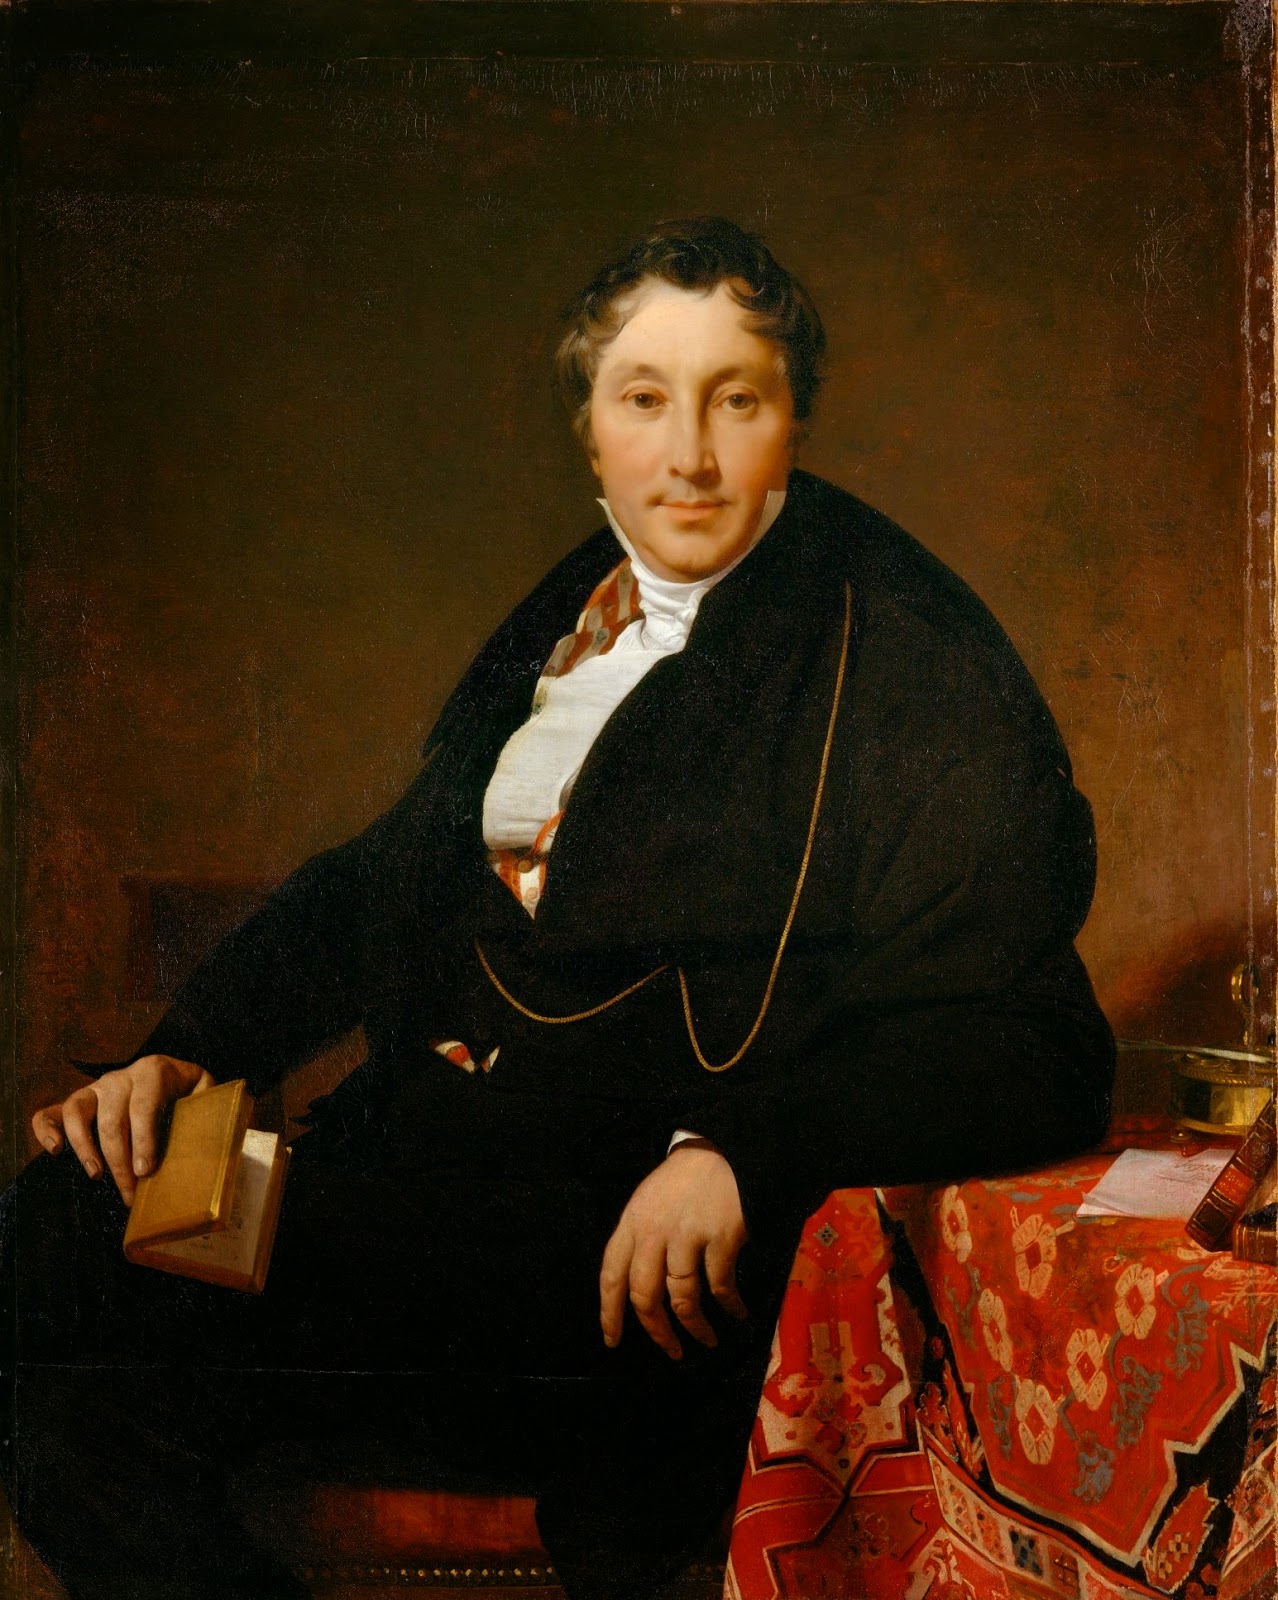 Jean+Auguste+Dominique+Ingres-1780-1867 (185).jpg